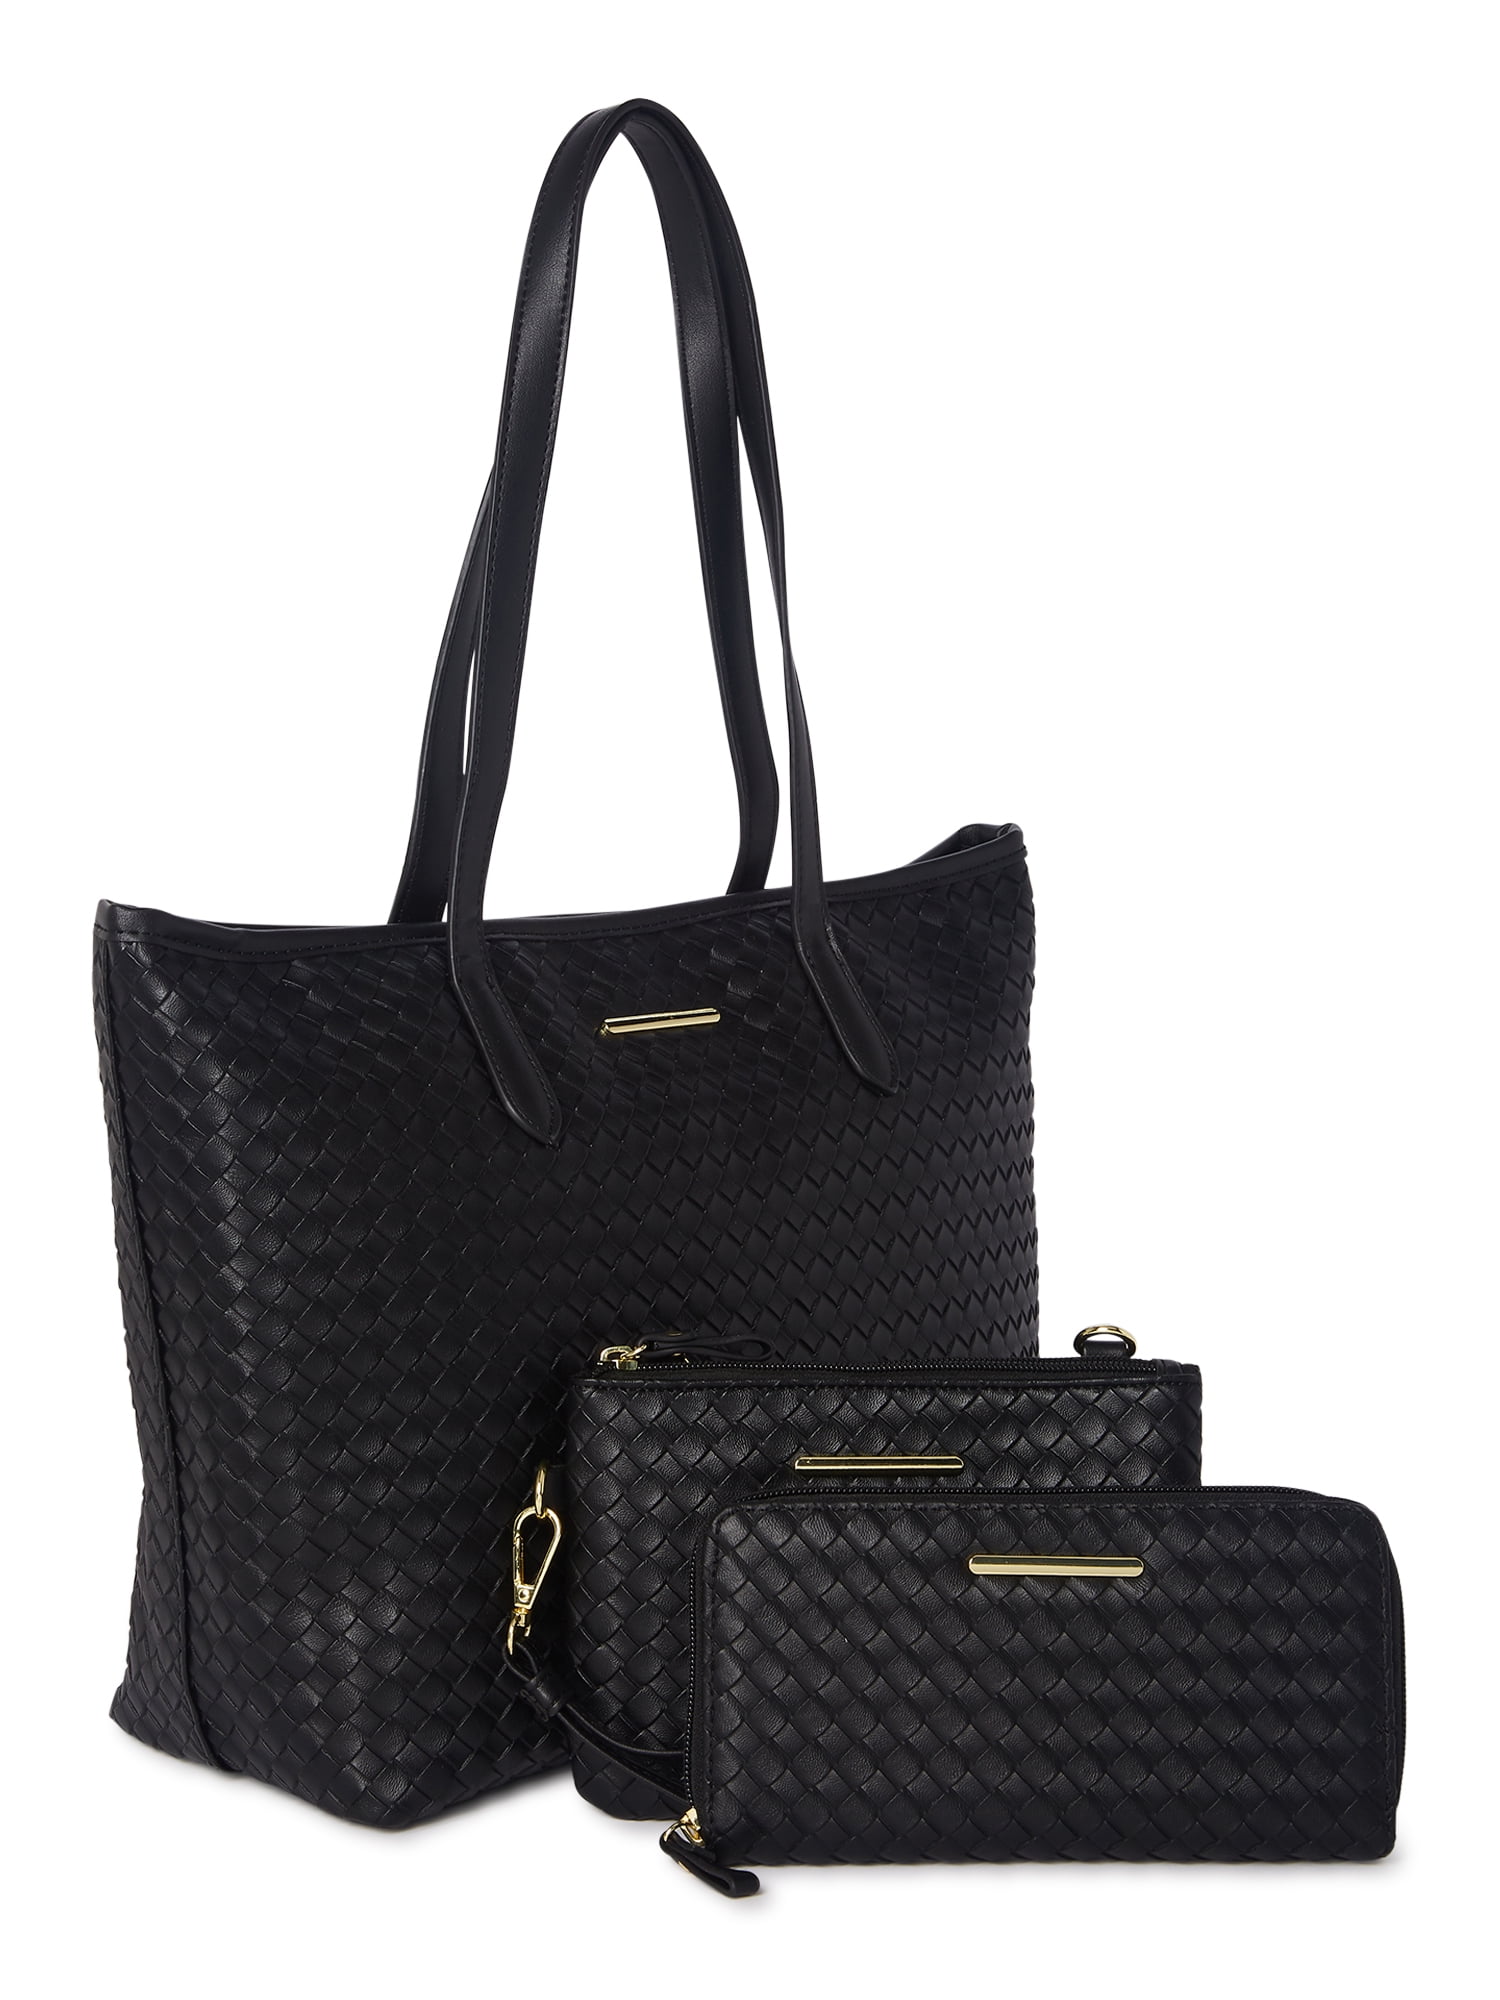 Crossbody Purses and Handbags Designer Handbags for Women Tote Envelope 3 Purses Set 